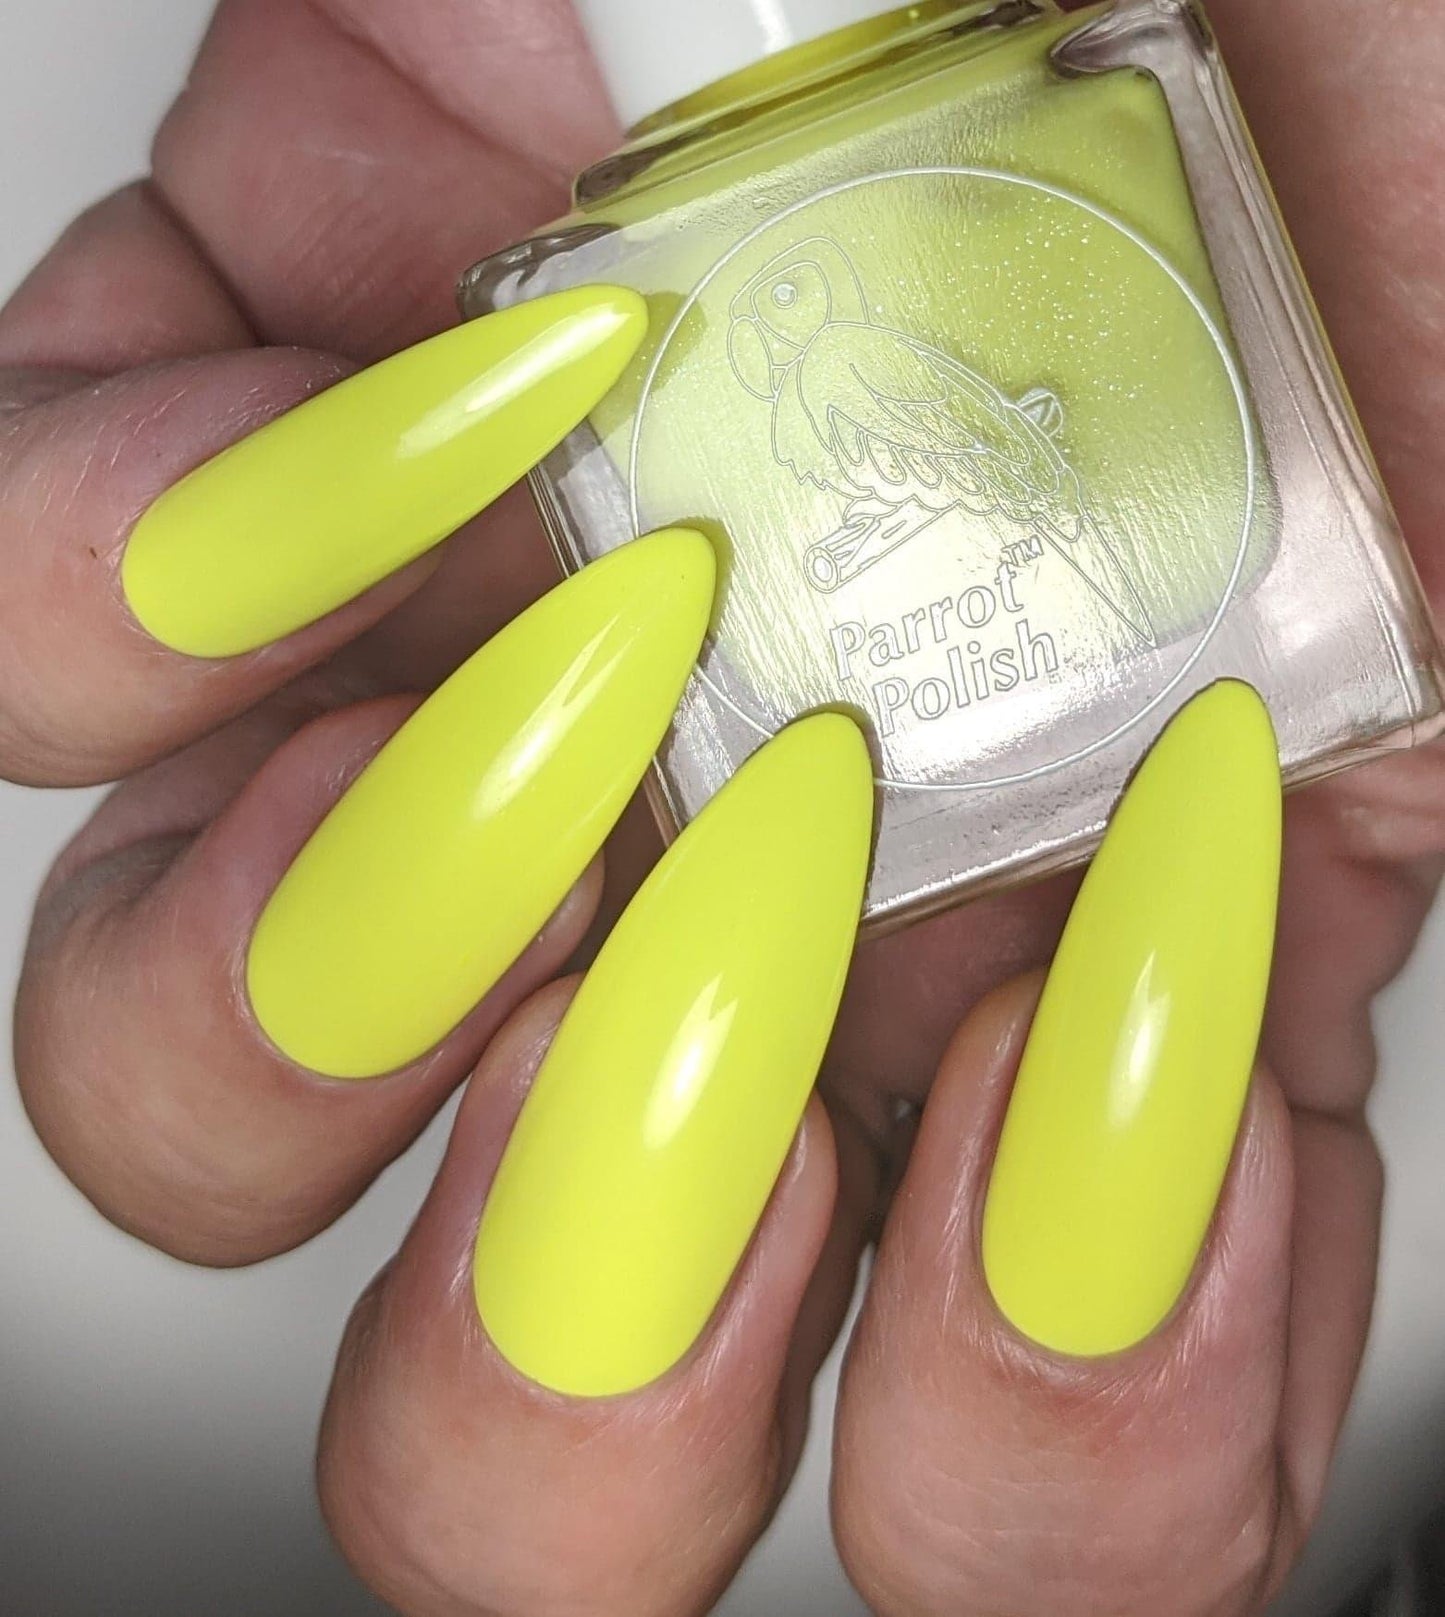 Parrot Polish Jelly Lemon Neon Pastel Yellow Nail Polish